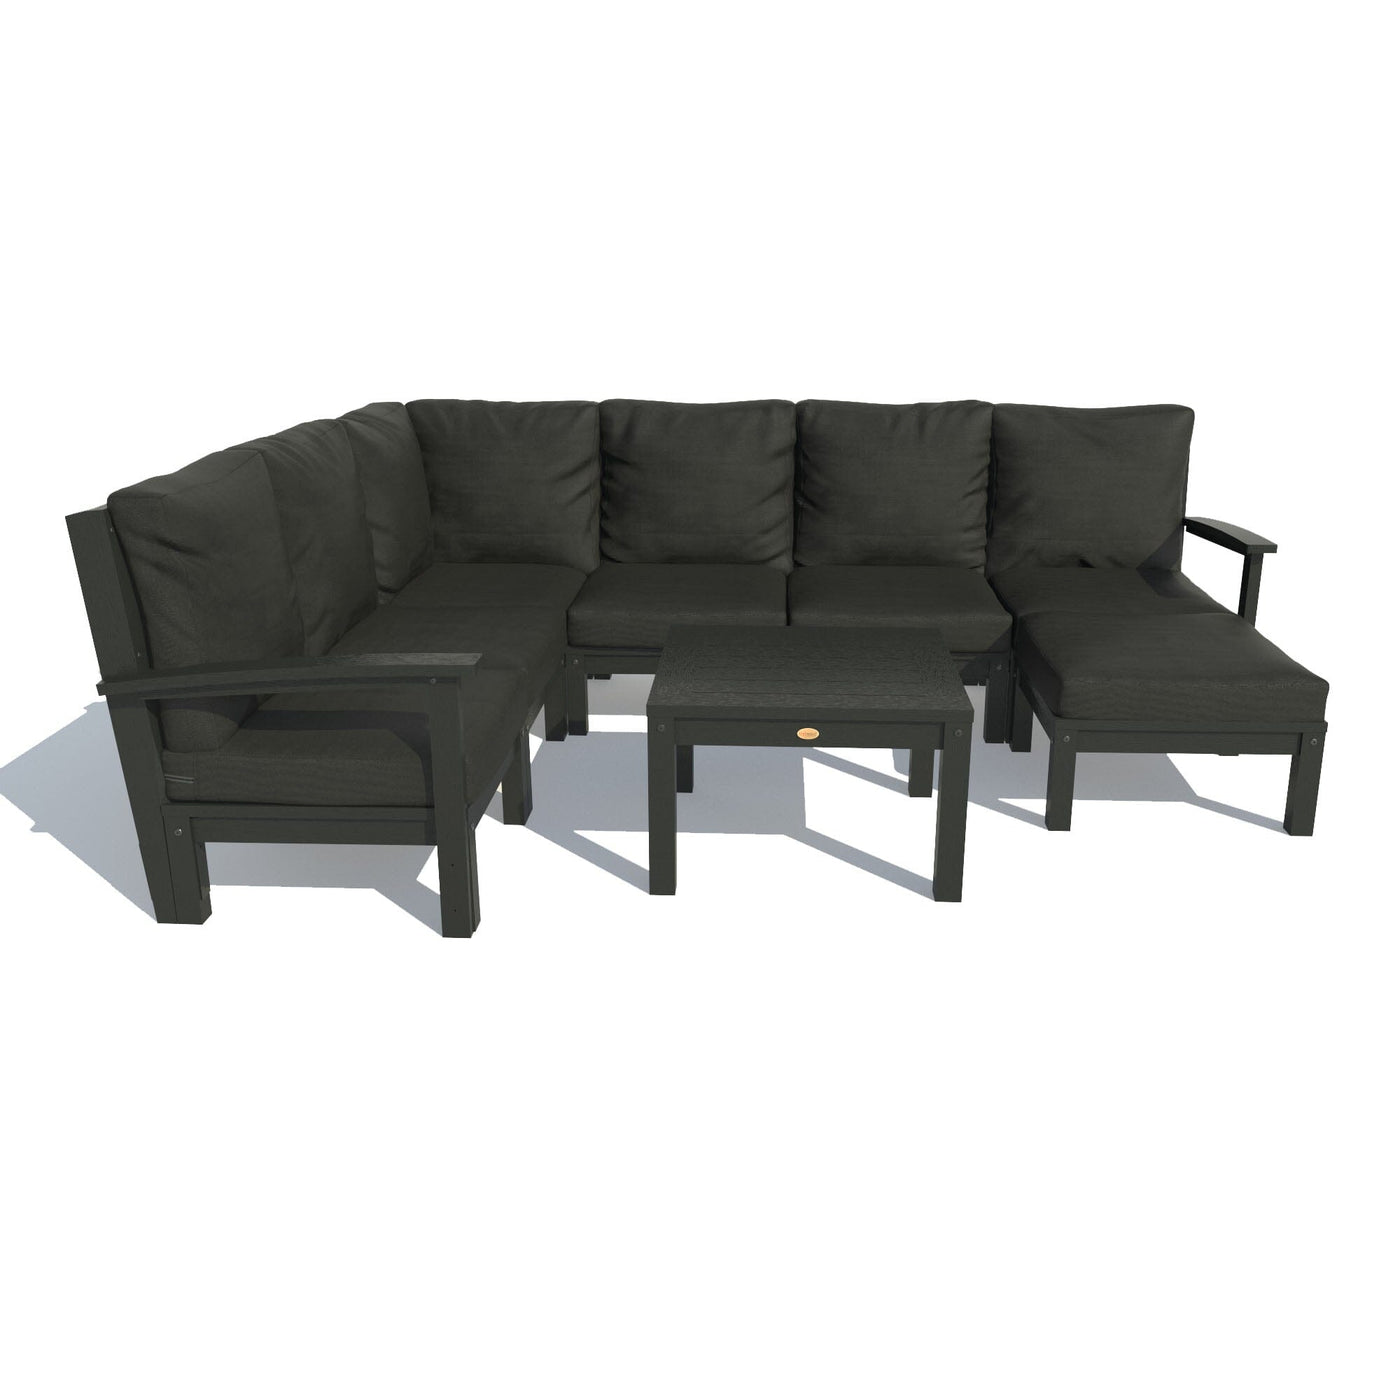 Bespoke Deep Seating: 8 Piece Sectional Sofa Set with Ottoman and Side Table Deep Seating Highwood USA Jet Black Black 